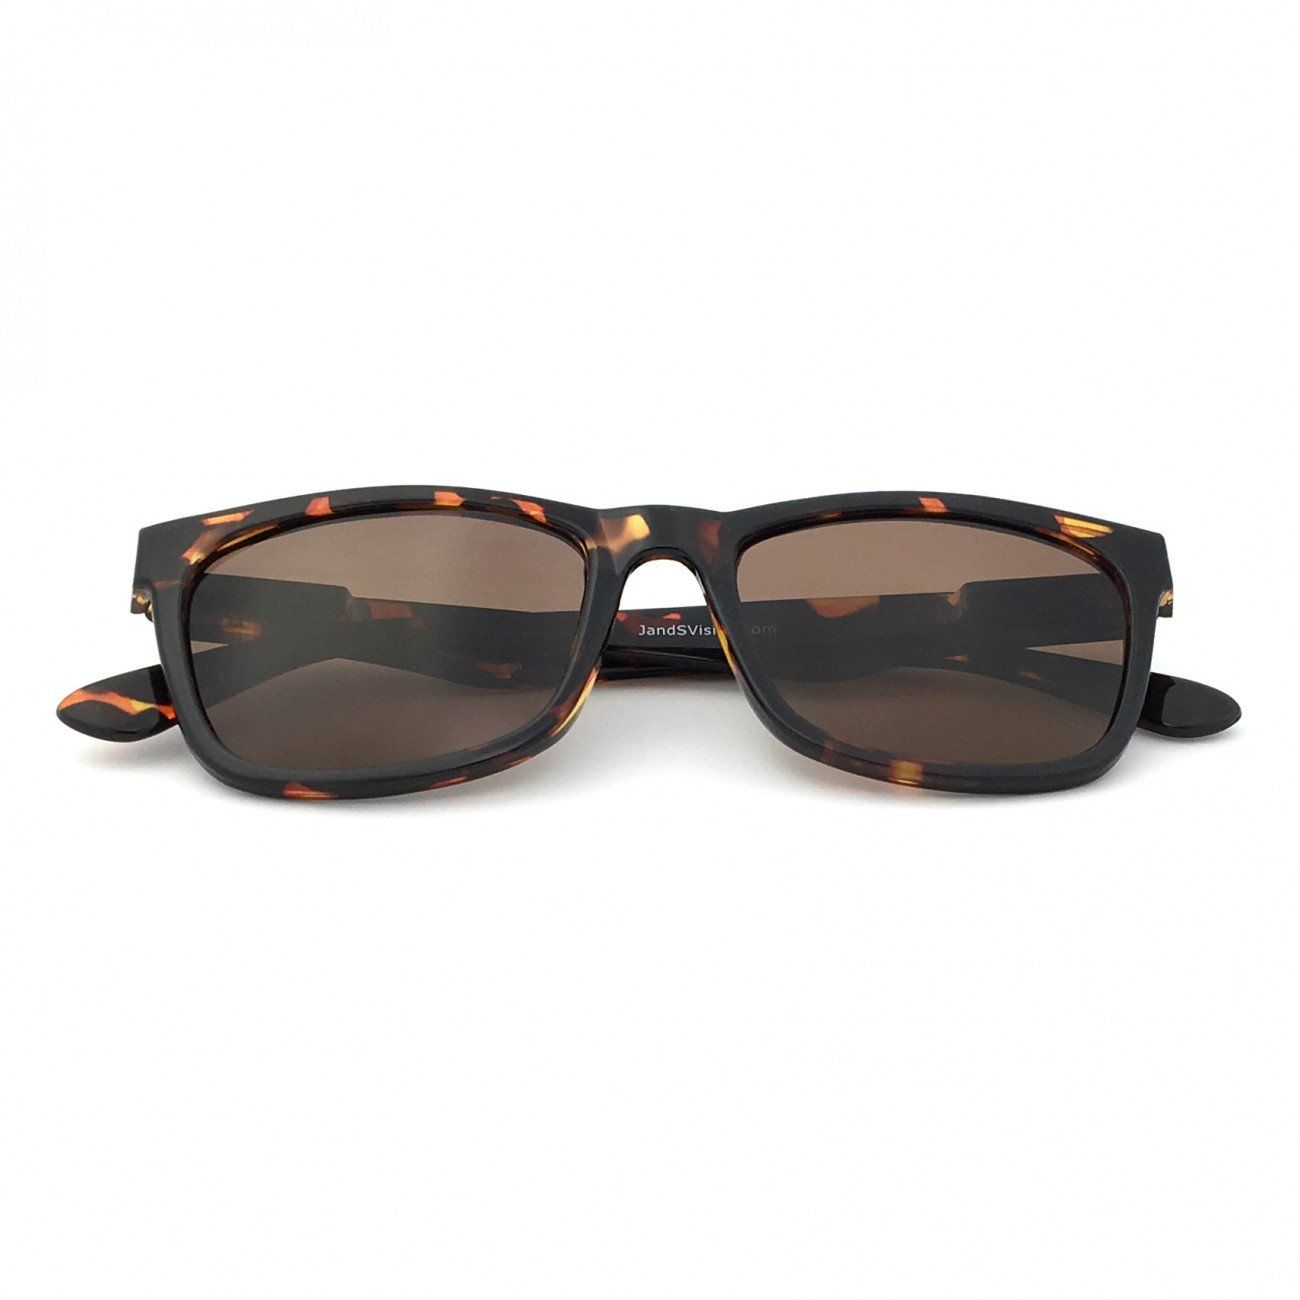 Polarized Sunglasses With 100% UV Protection